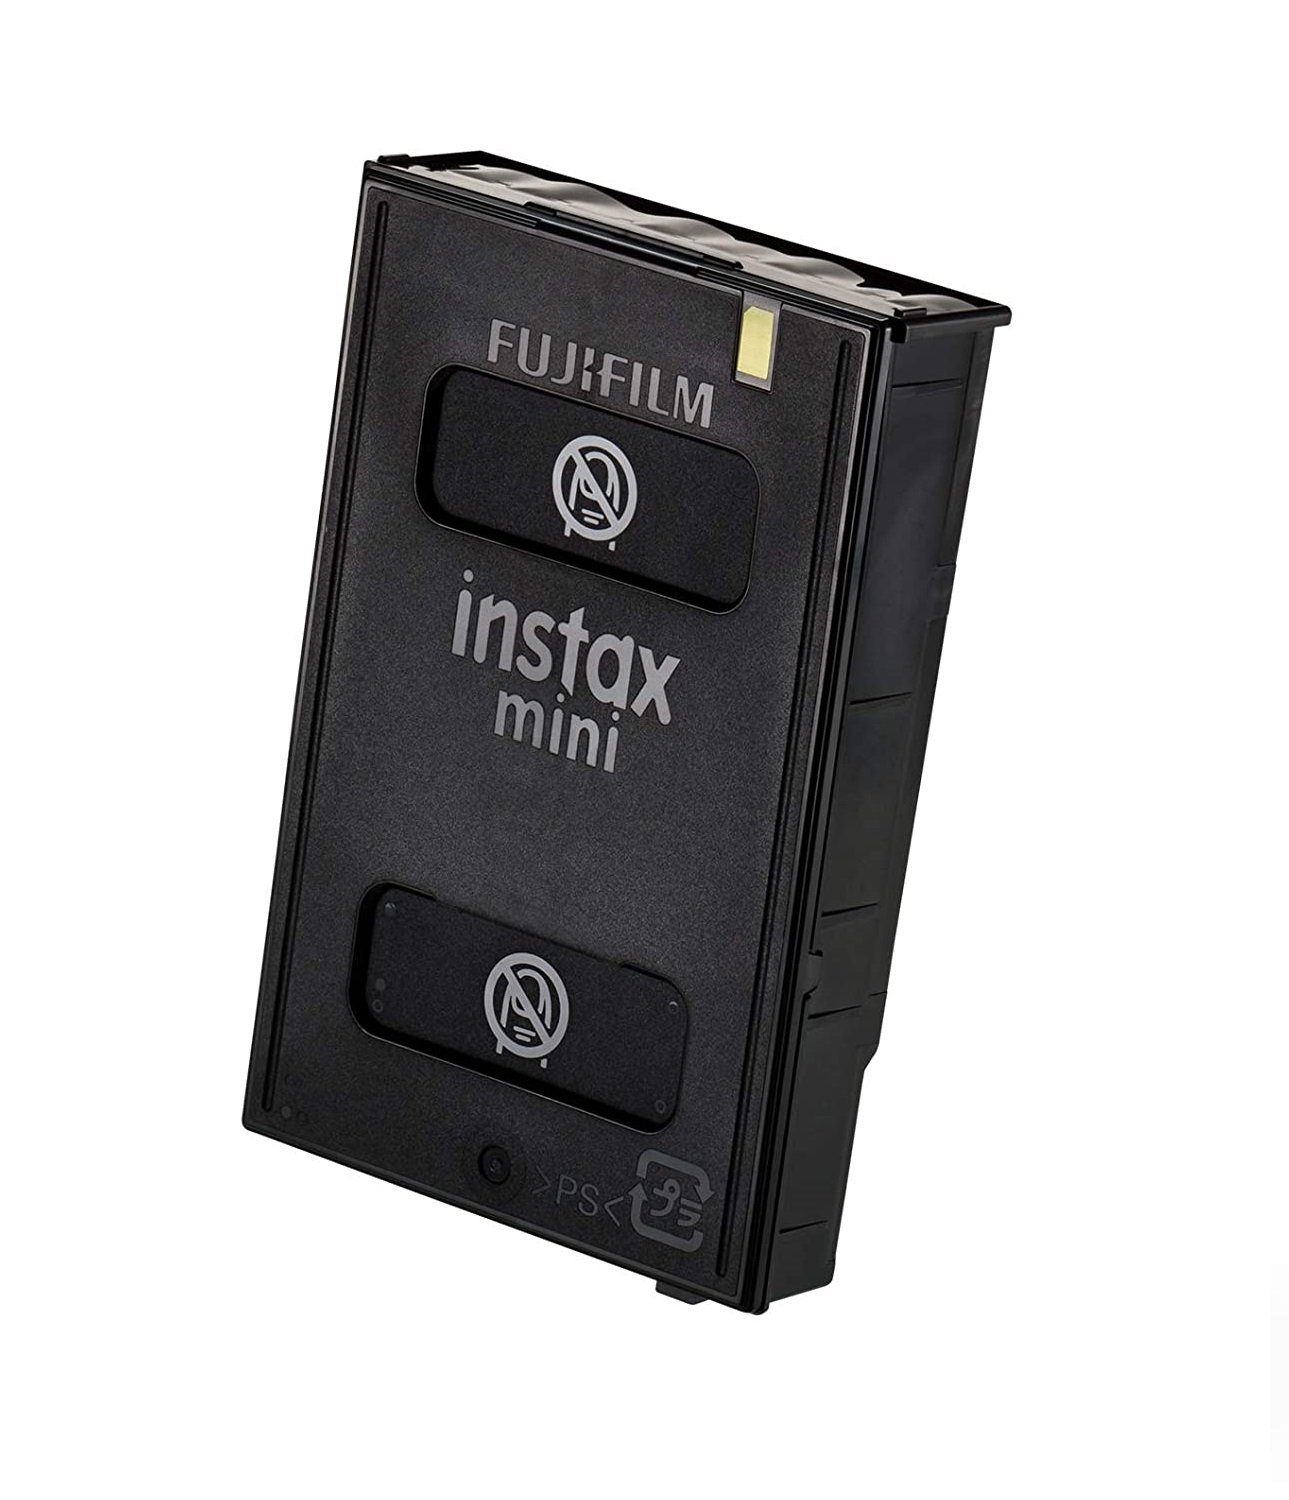 Aufnahmen 6x10 für Instant Doppelpack Fujifilm dawecom-24 3x Instax Film - Mini Sofortbildkamera